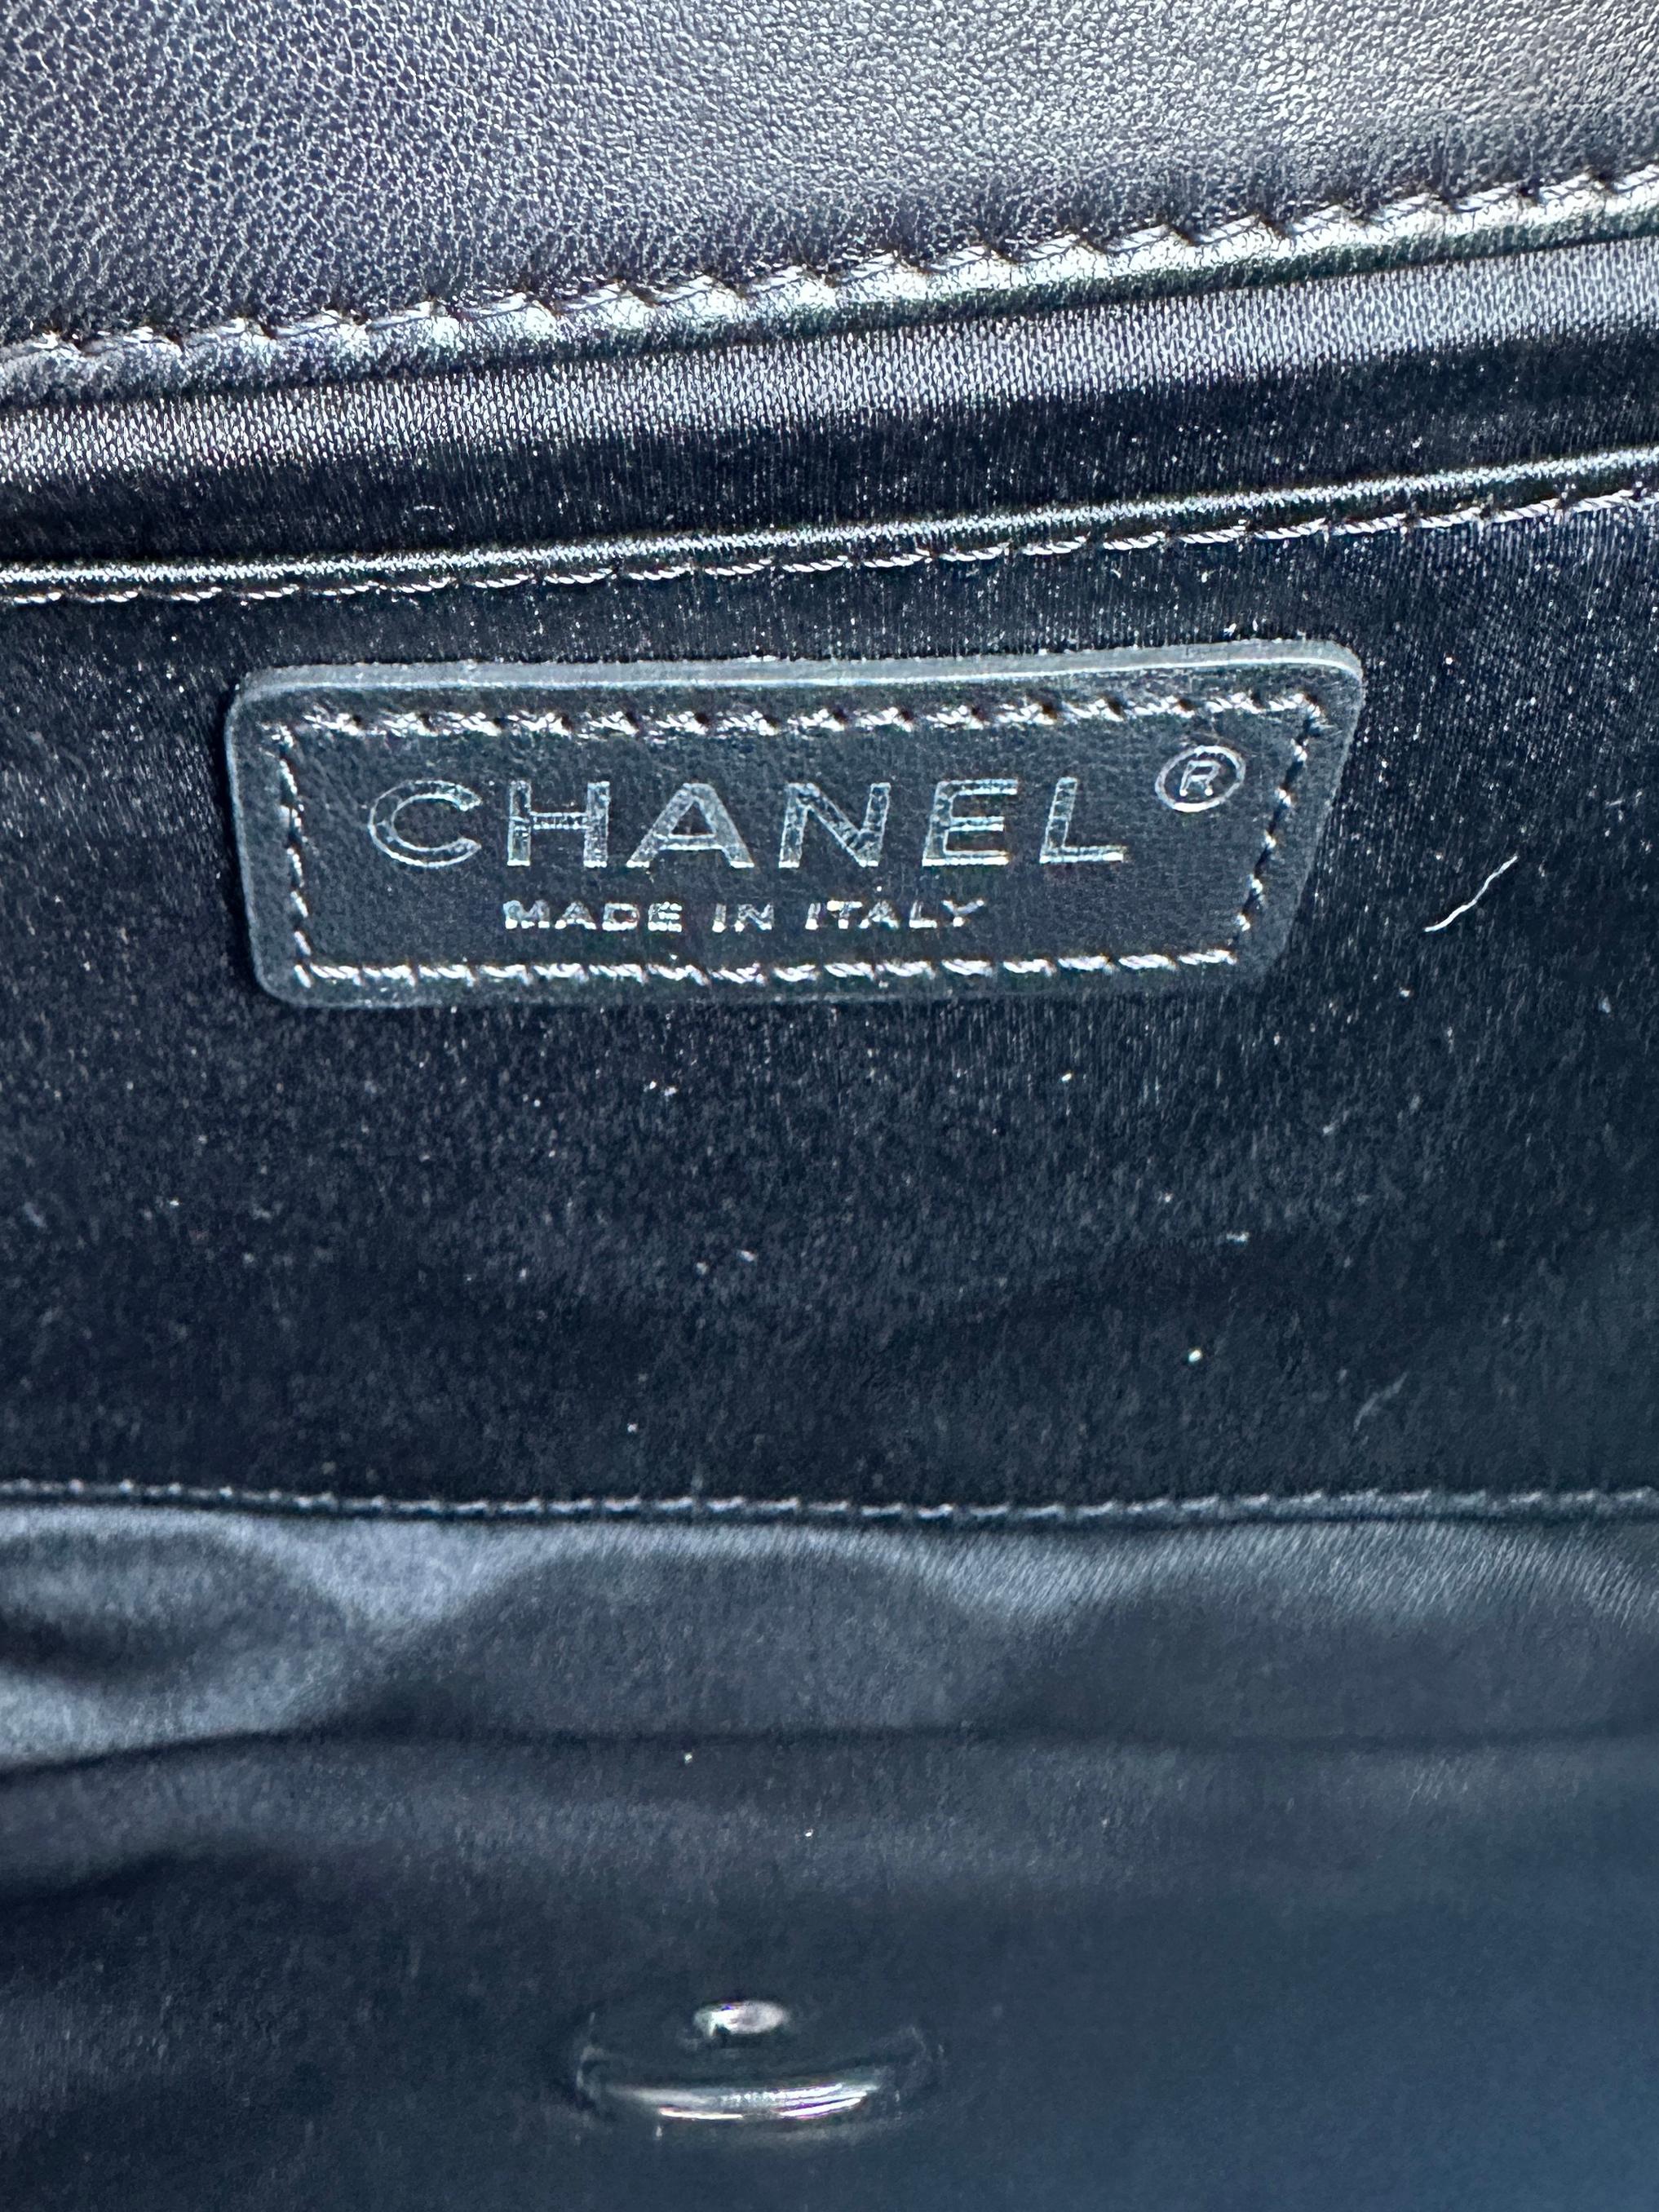 Chanel Black Lambskin Leather CC Twistlock Clutch Bag For Sale 3